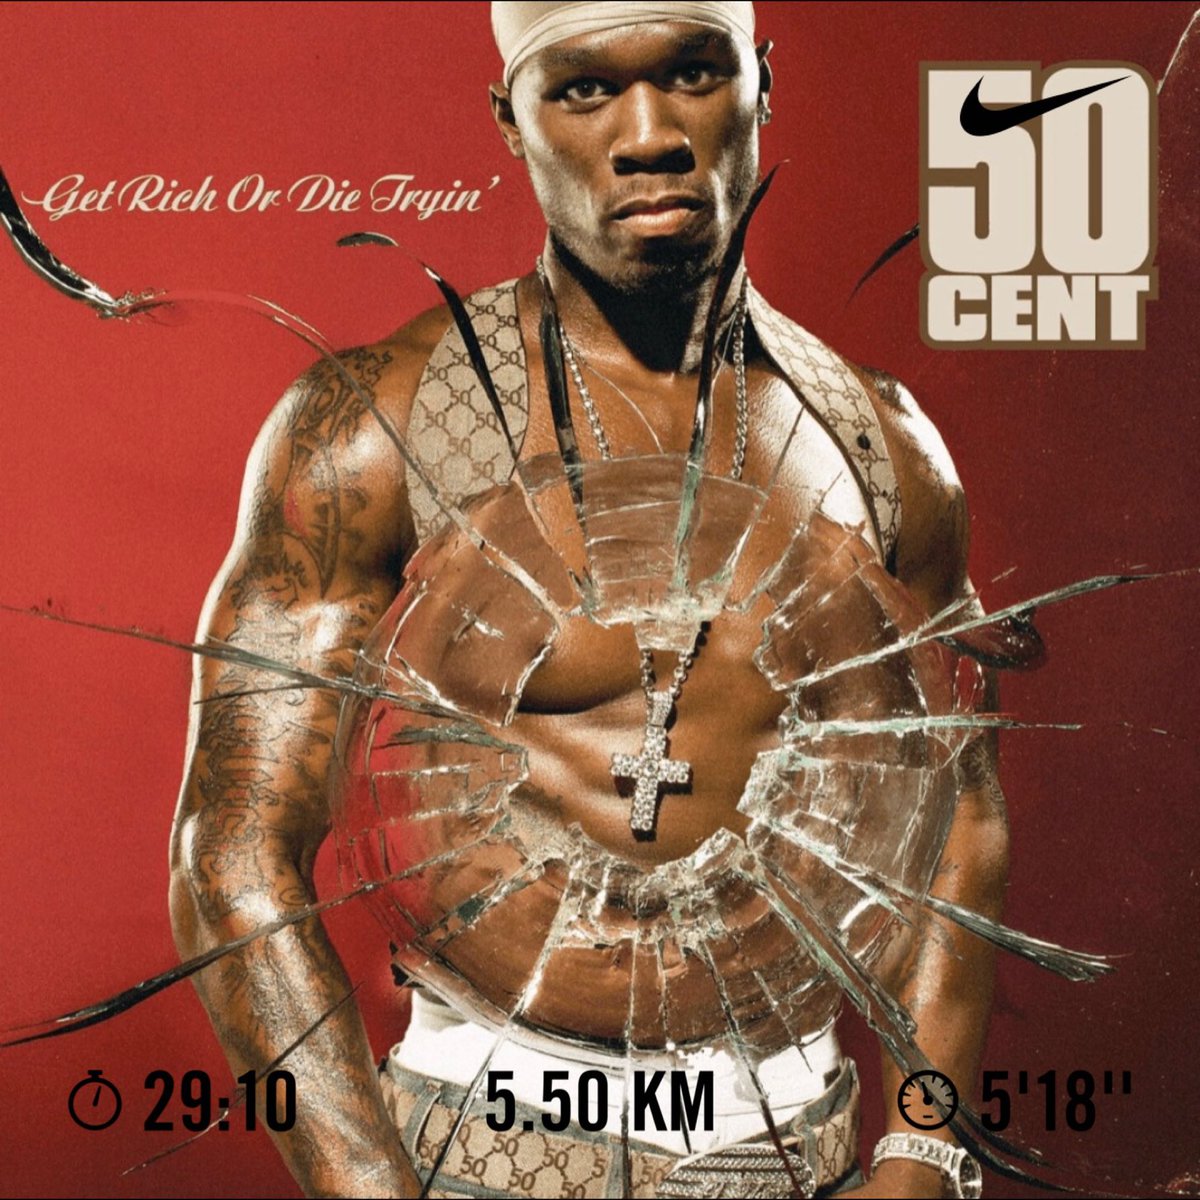 GET RICH OR DIE TRYIN’ // 50 Cent // 06 • 02 • 2003

#GetRichOrDieTryin #50Cent #Rap #EastCoastRap #GangstaRap #Running #NRC #NikeRunning #ComeRunWithUs #JustDoIt #RunWithMusic #AlbumOfTheDay